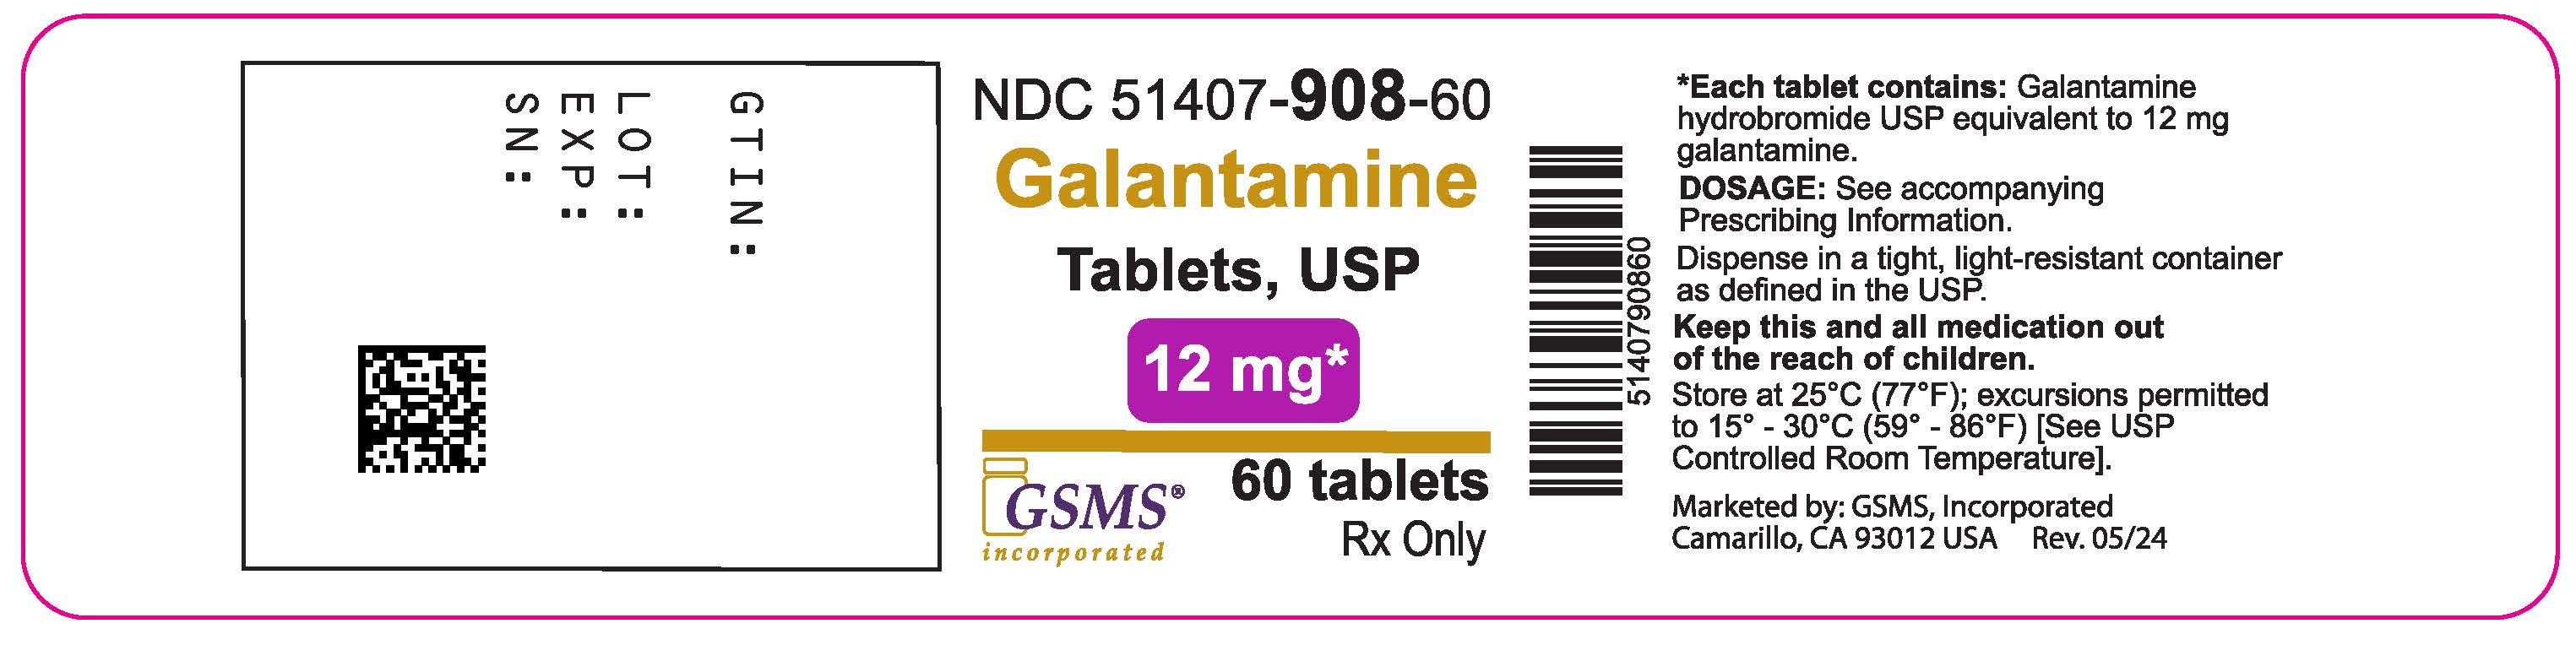 51407-908-60OL - Galantamine 12 mg - Rev. 0524.jpg